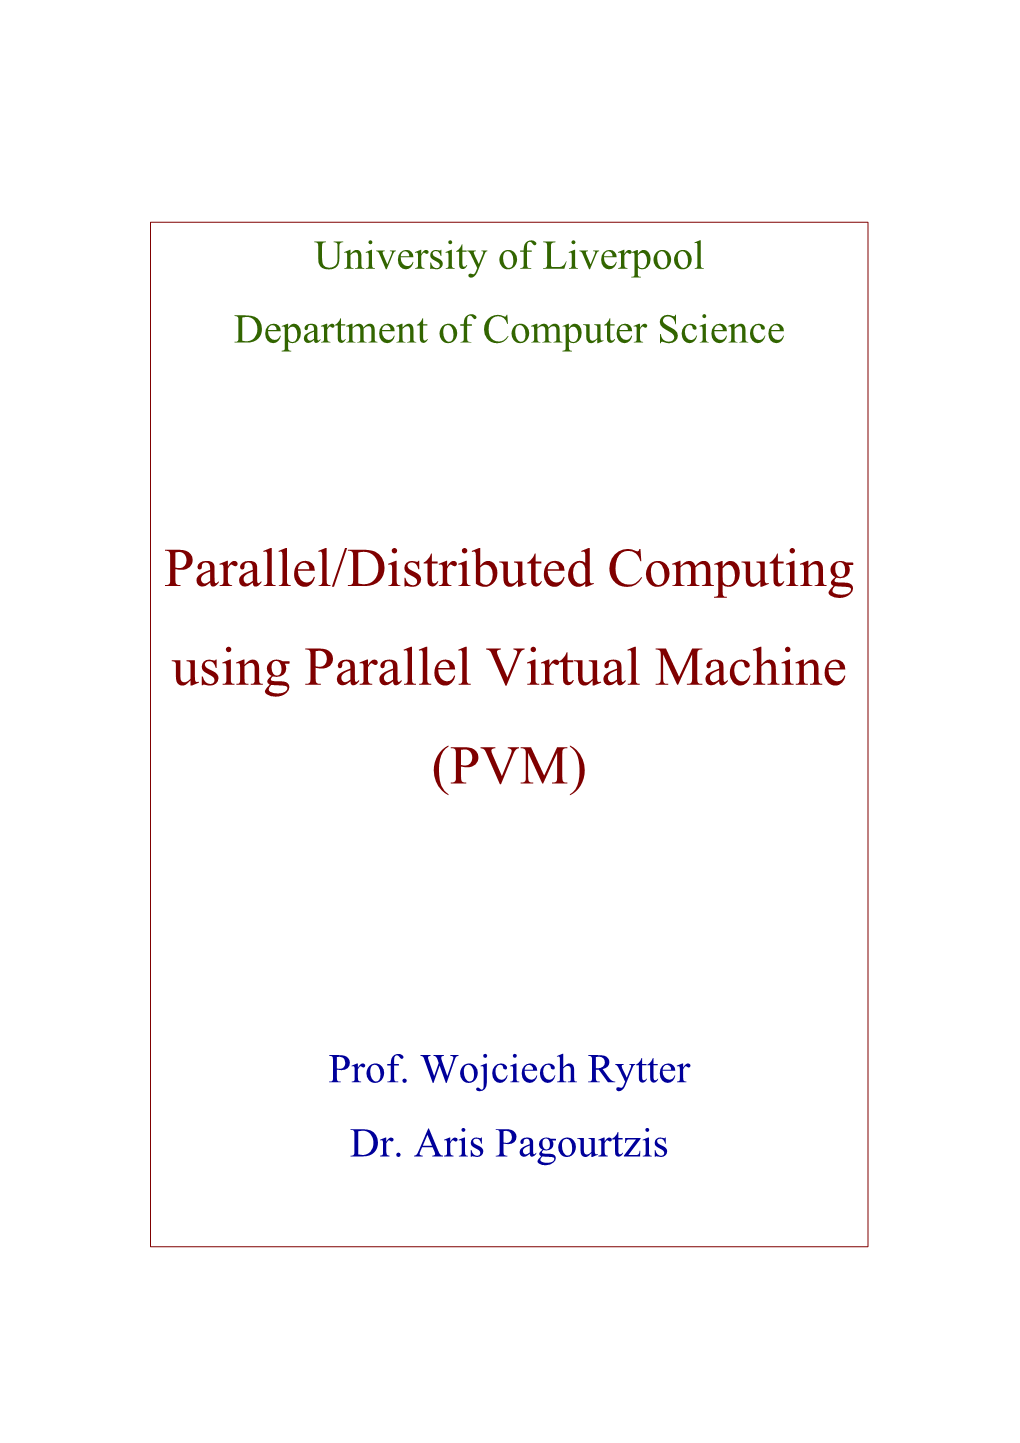 Parallel/Distributed Computing Using Parallel Virtual Machine (PVM)